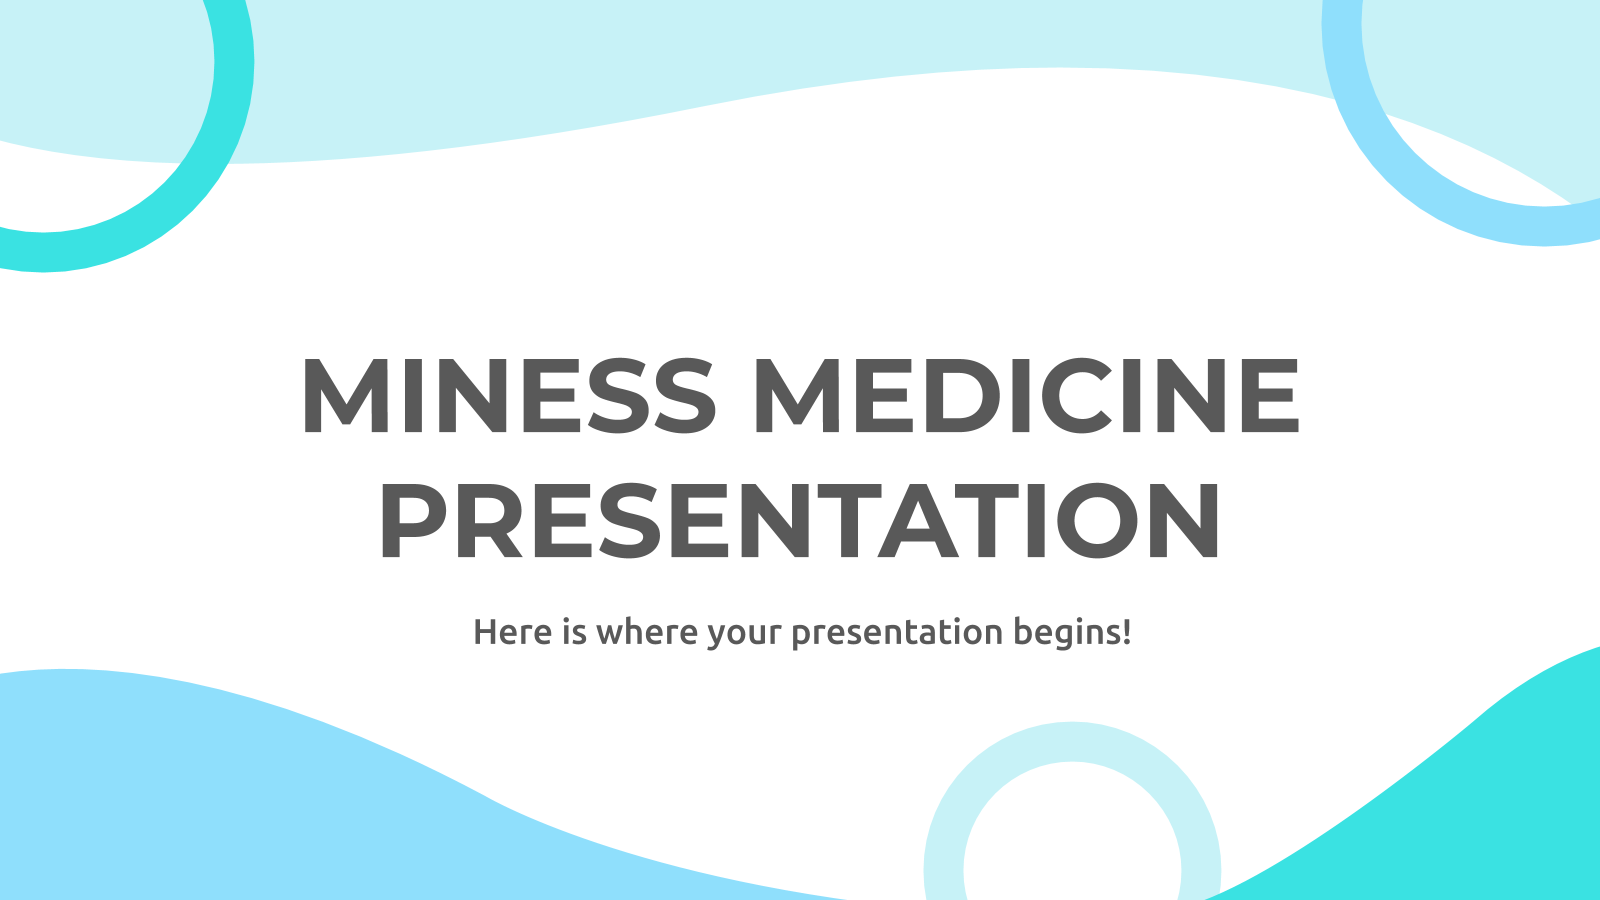 Miness Medicine 和PowerPoint模板